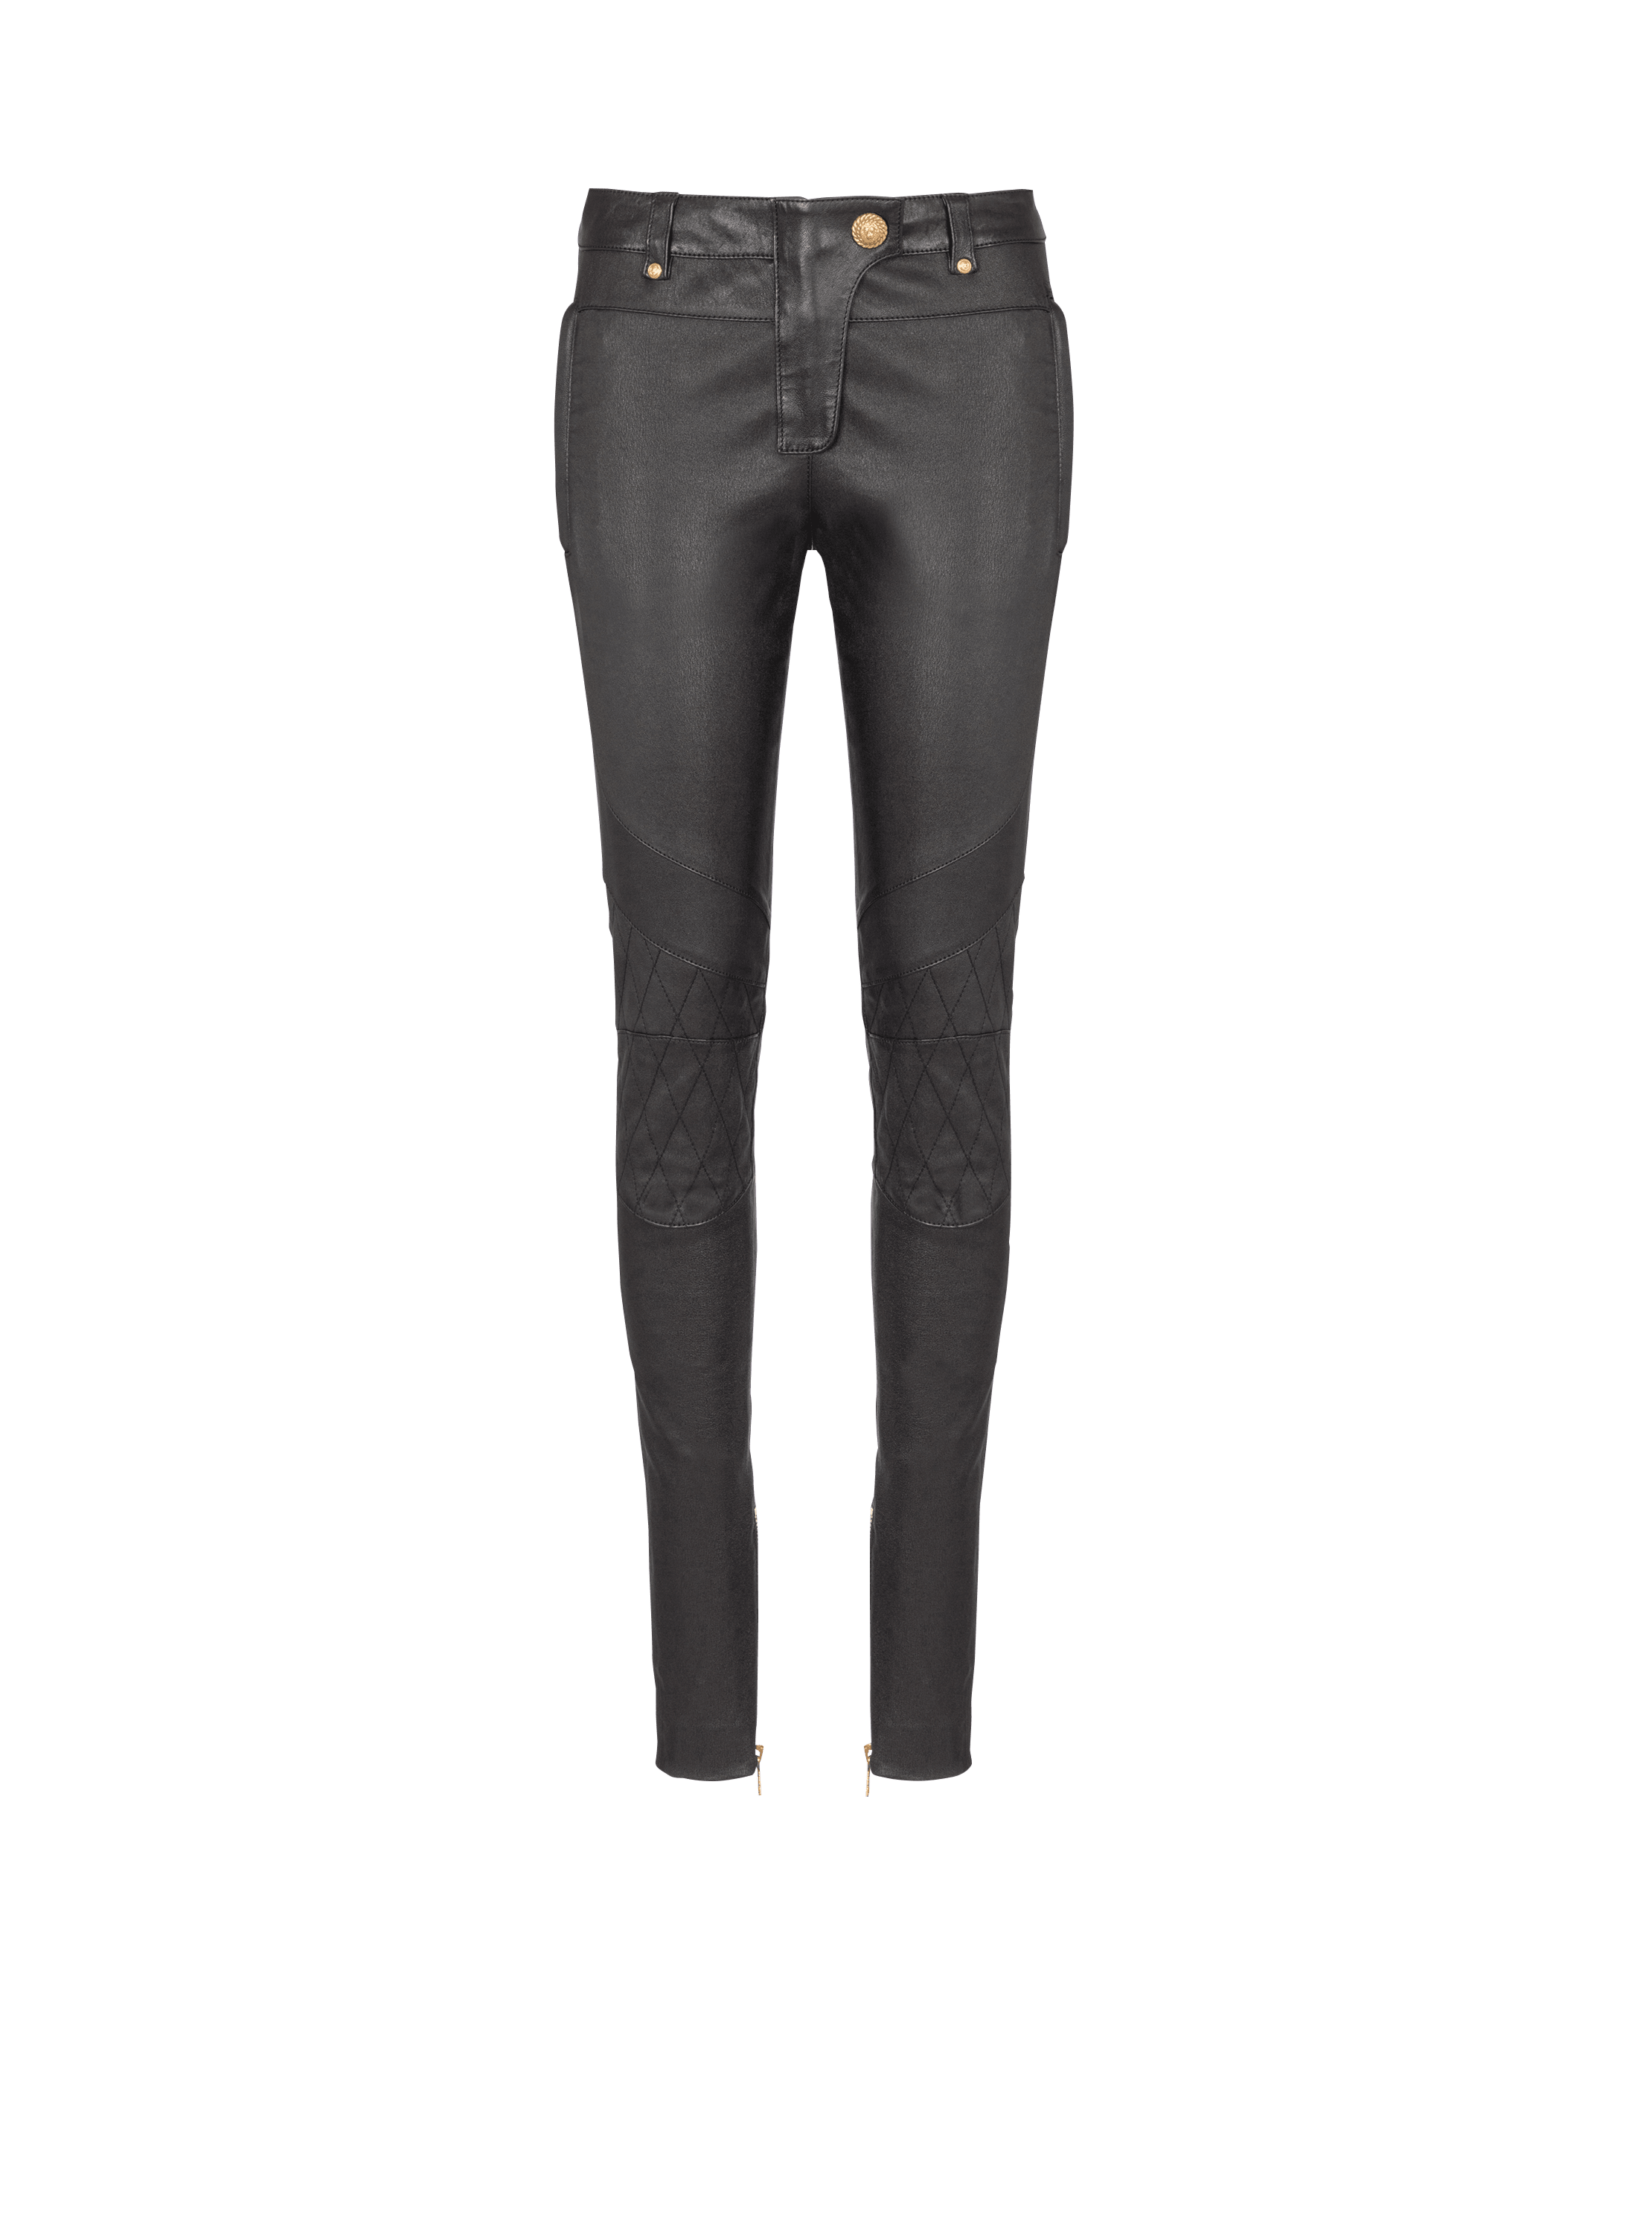 Balmain Black Skinny Leather Pants S